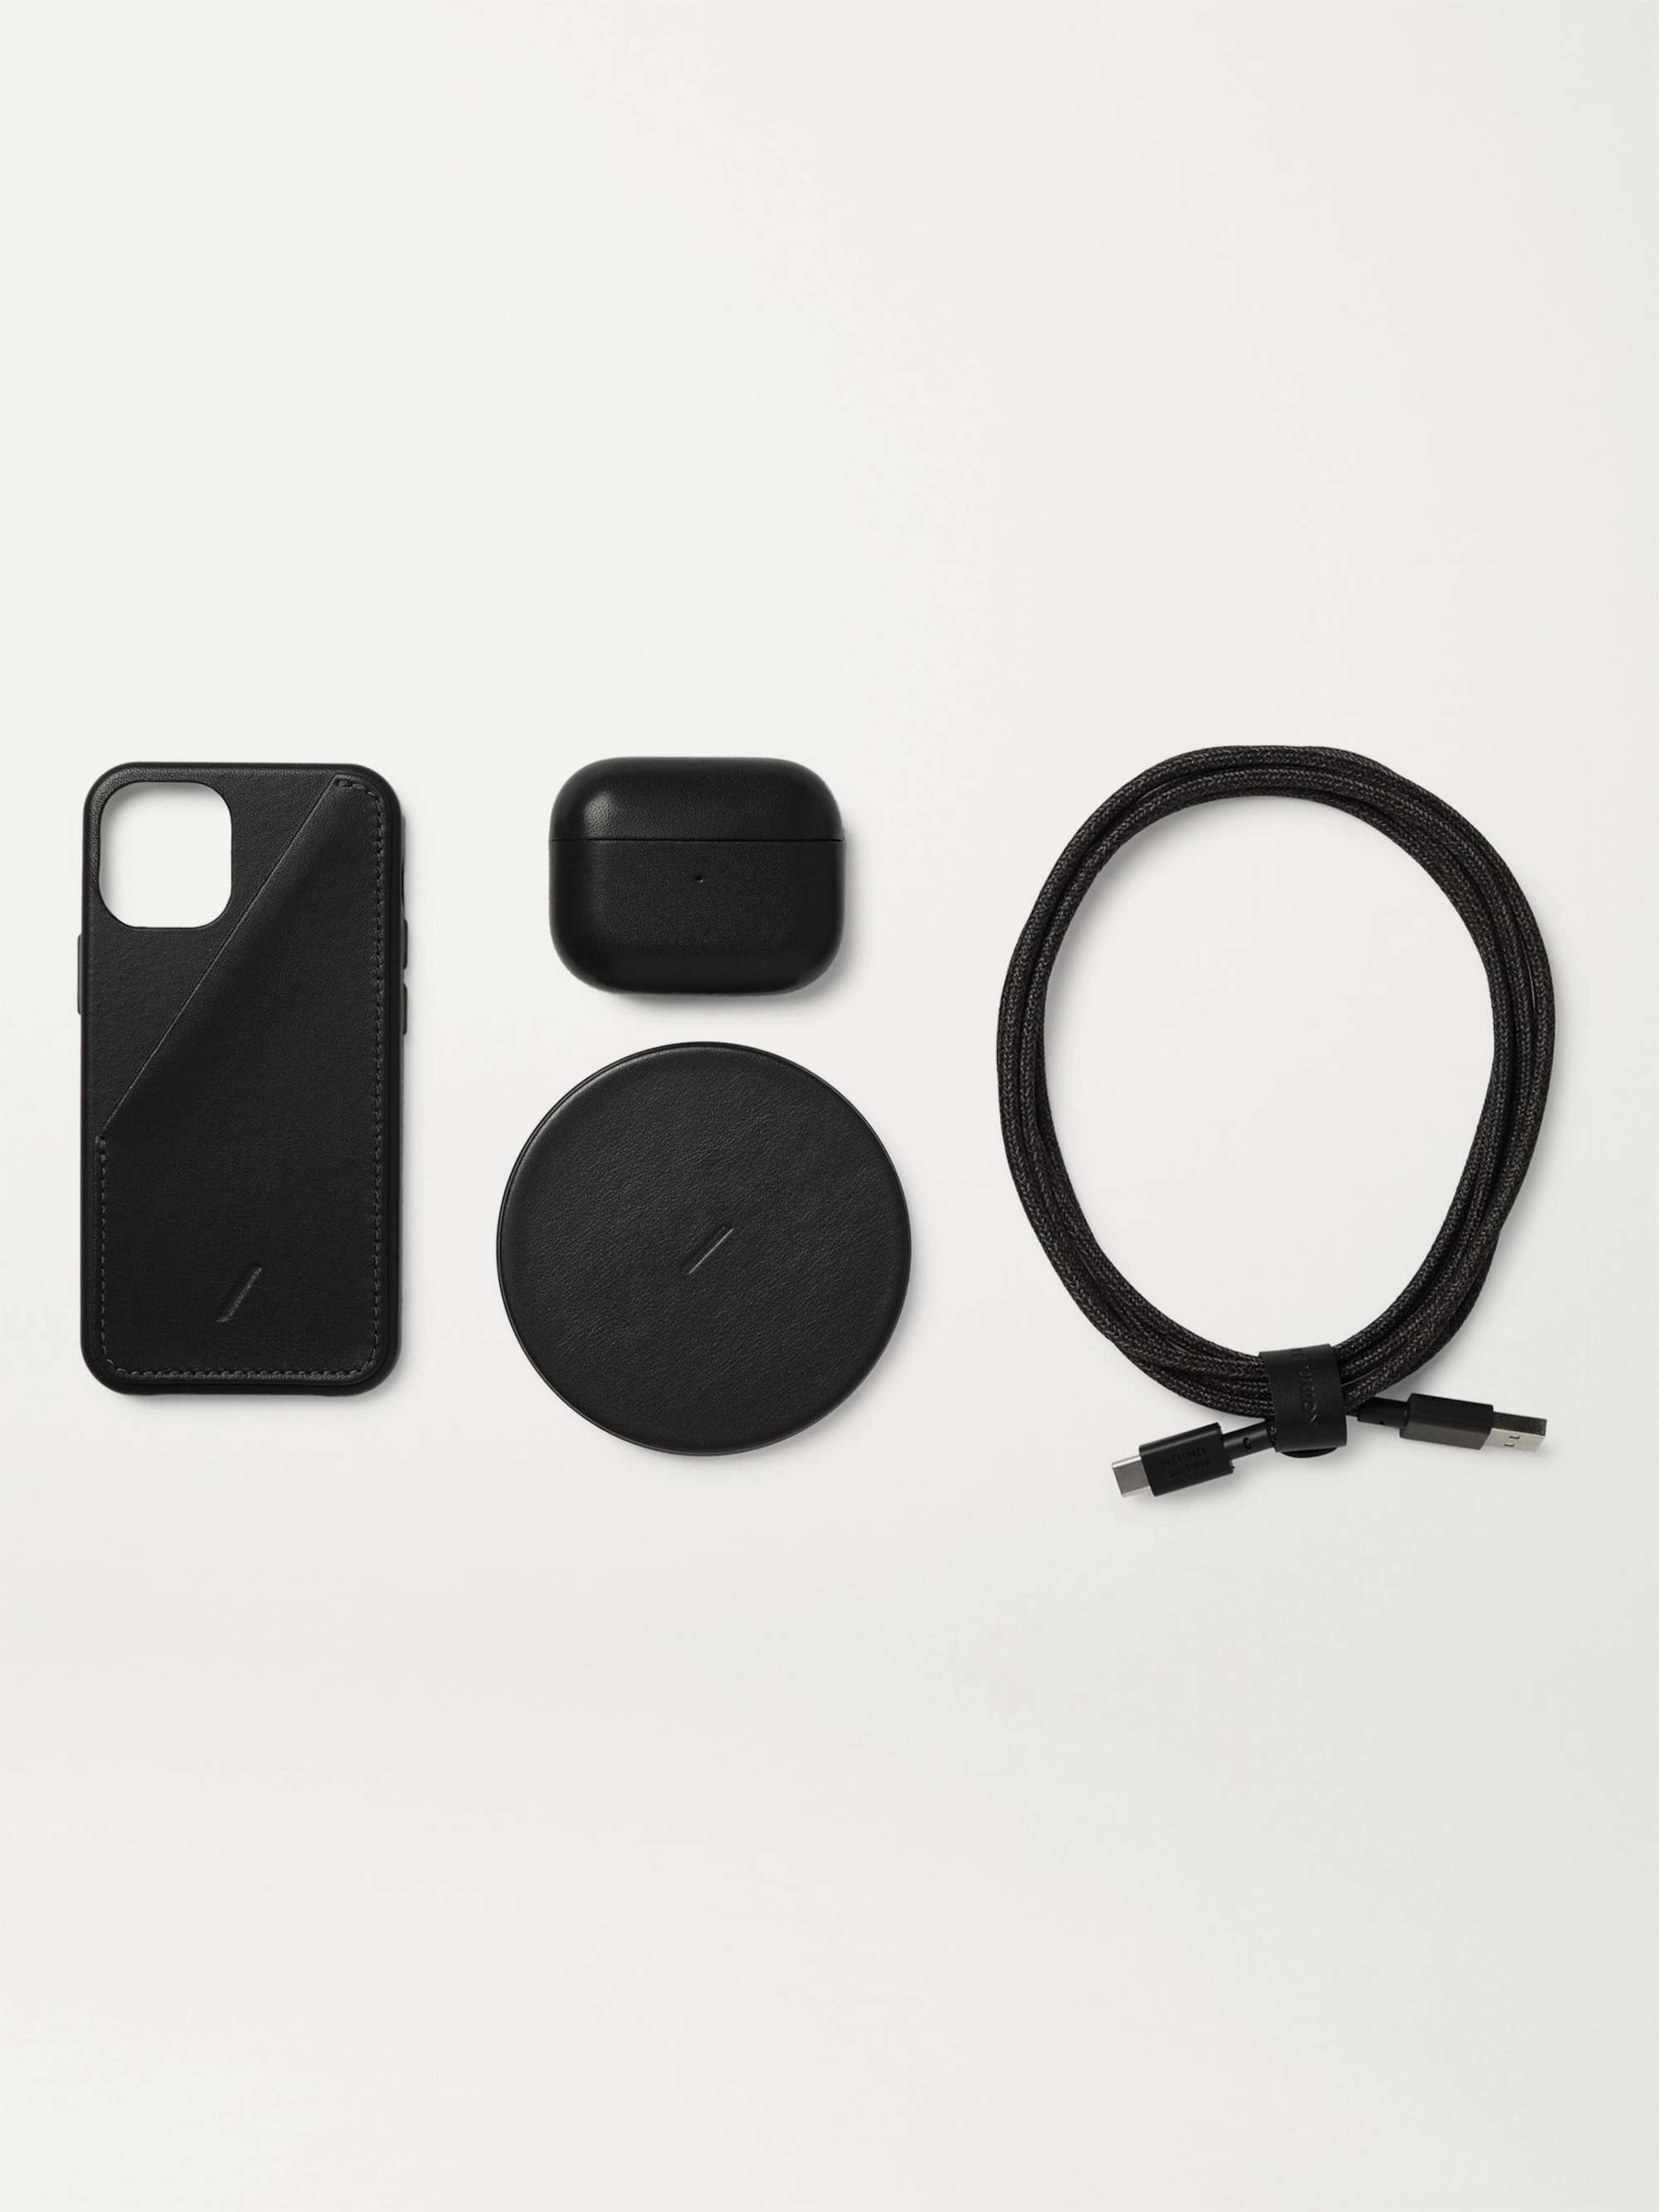 NATIVE UNION Leather iPhone 12 Pro Accessories Bundle